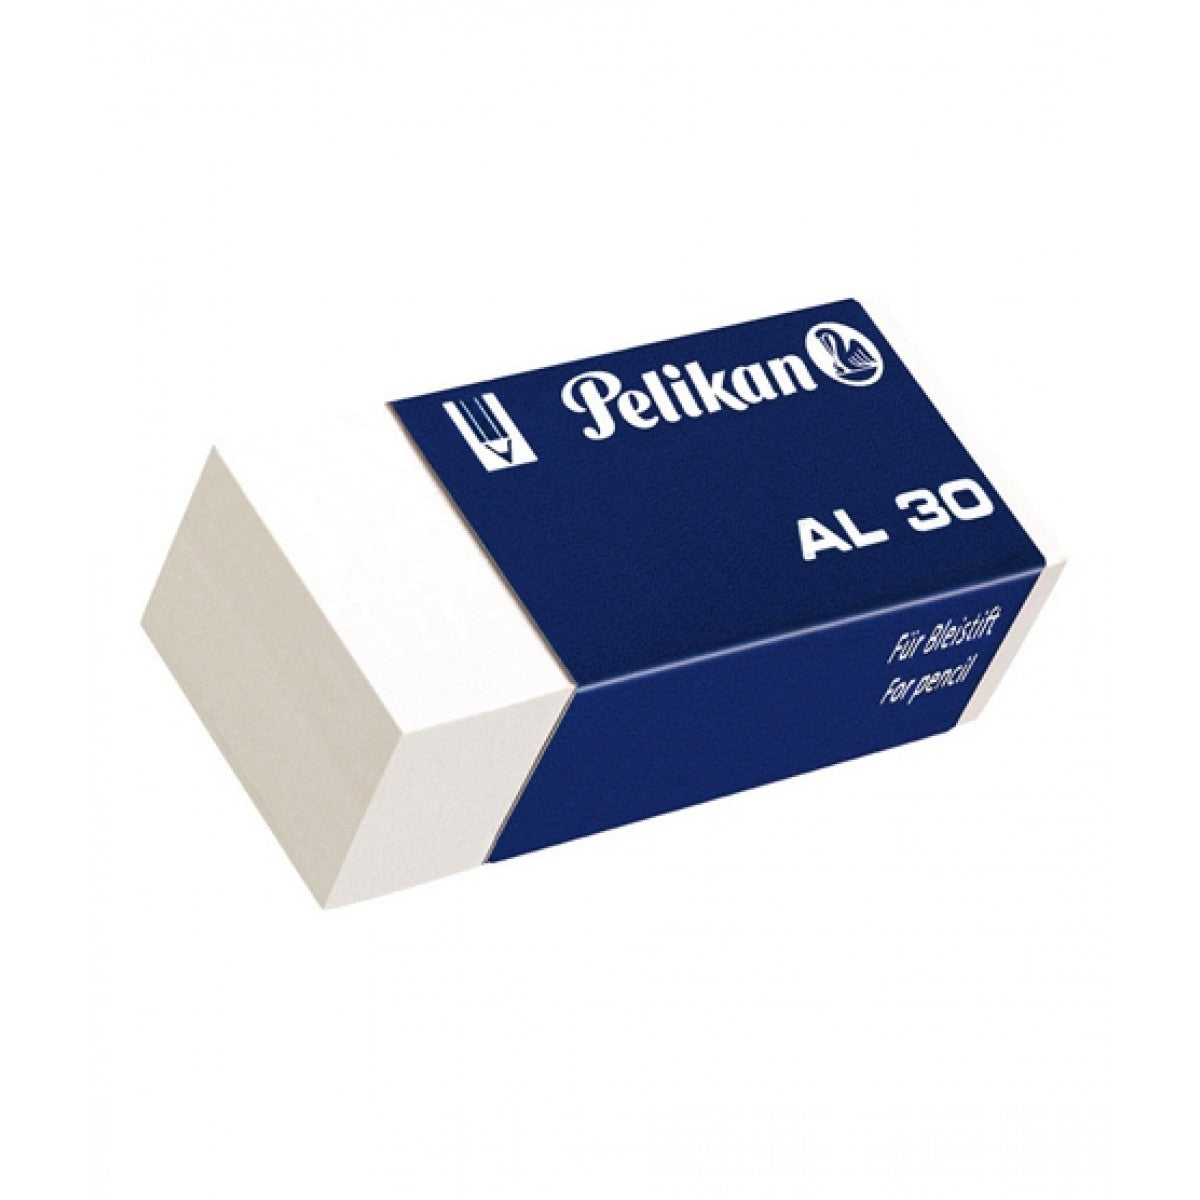 Pelikan AL 30 Eraser